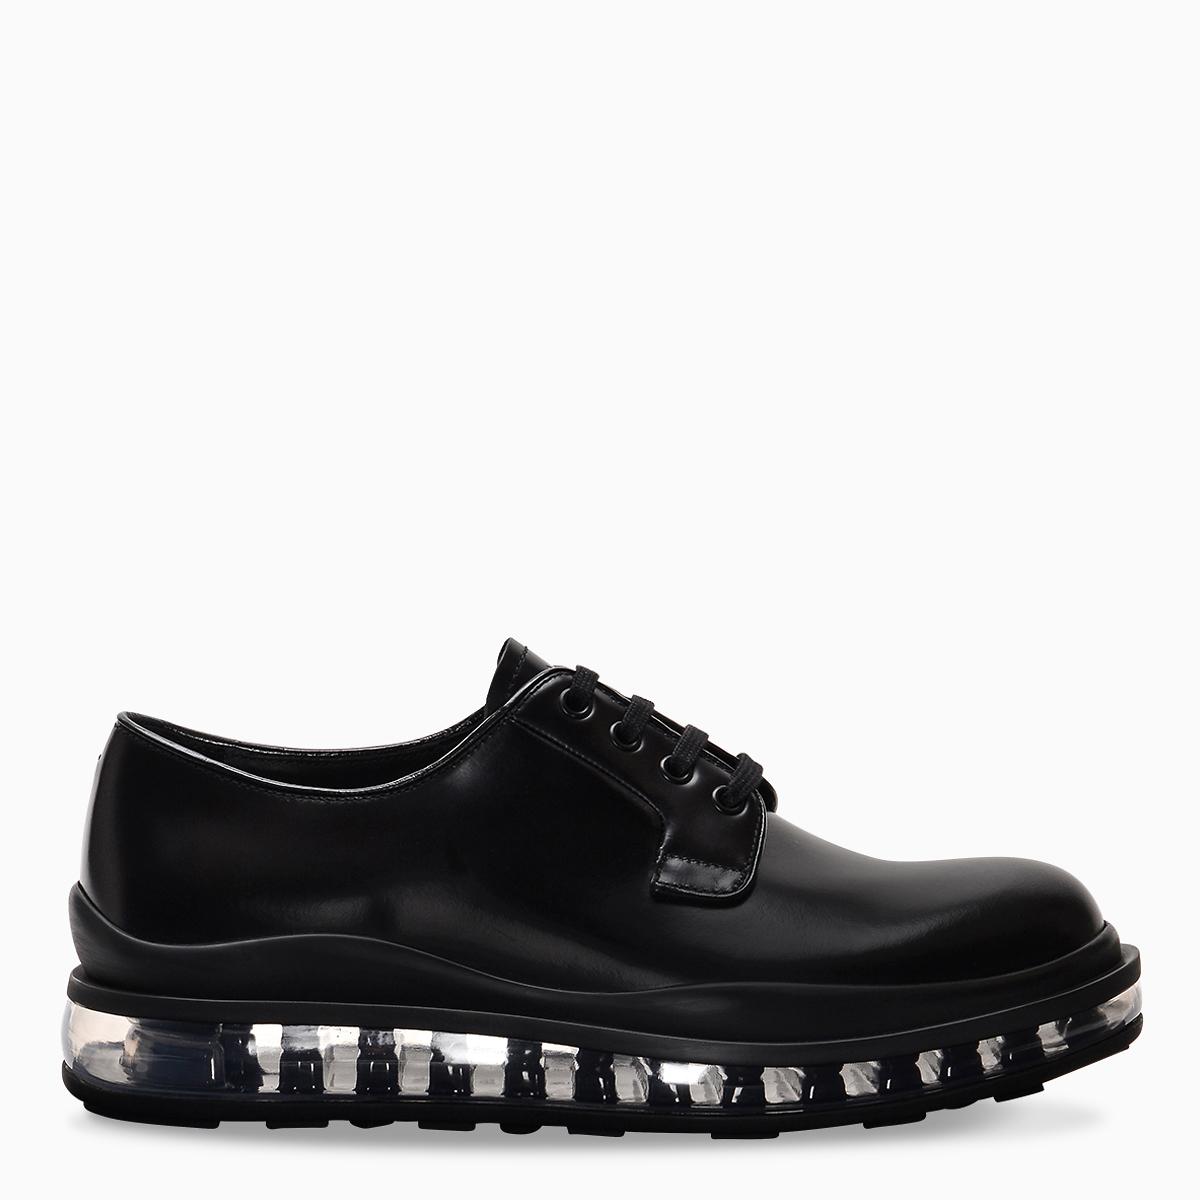 Prada Leather Black Levitate Derby Shoes for Men - Lyst